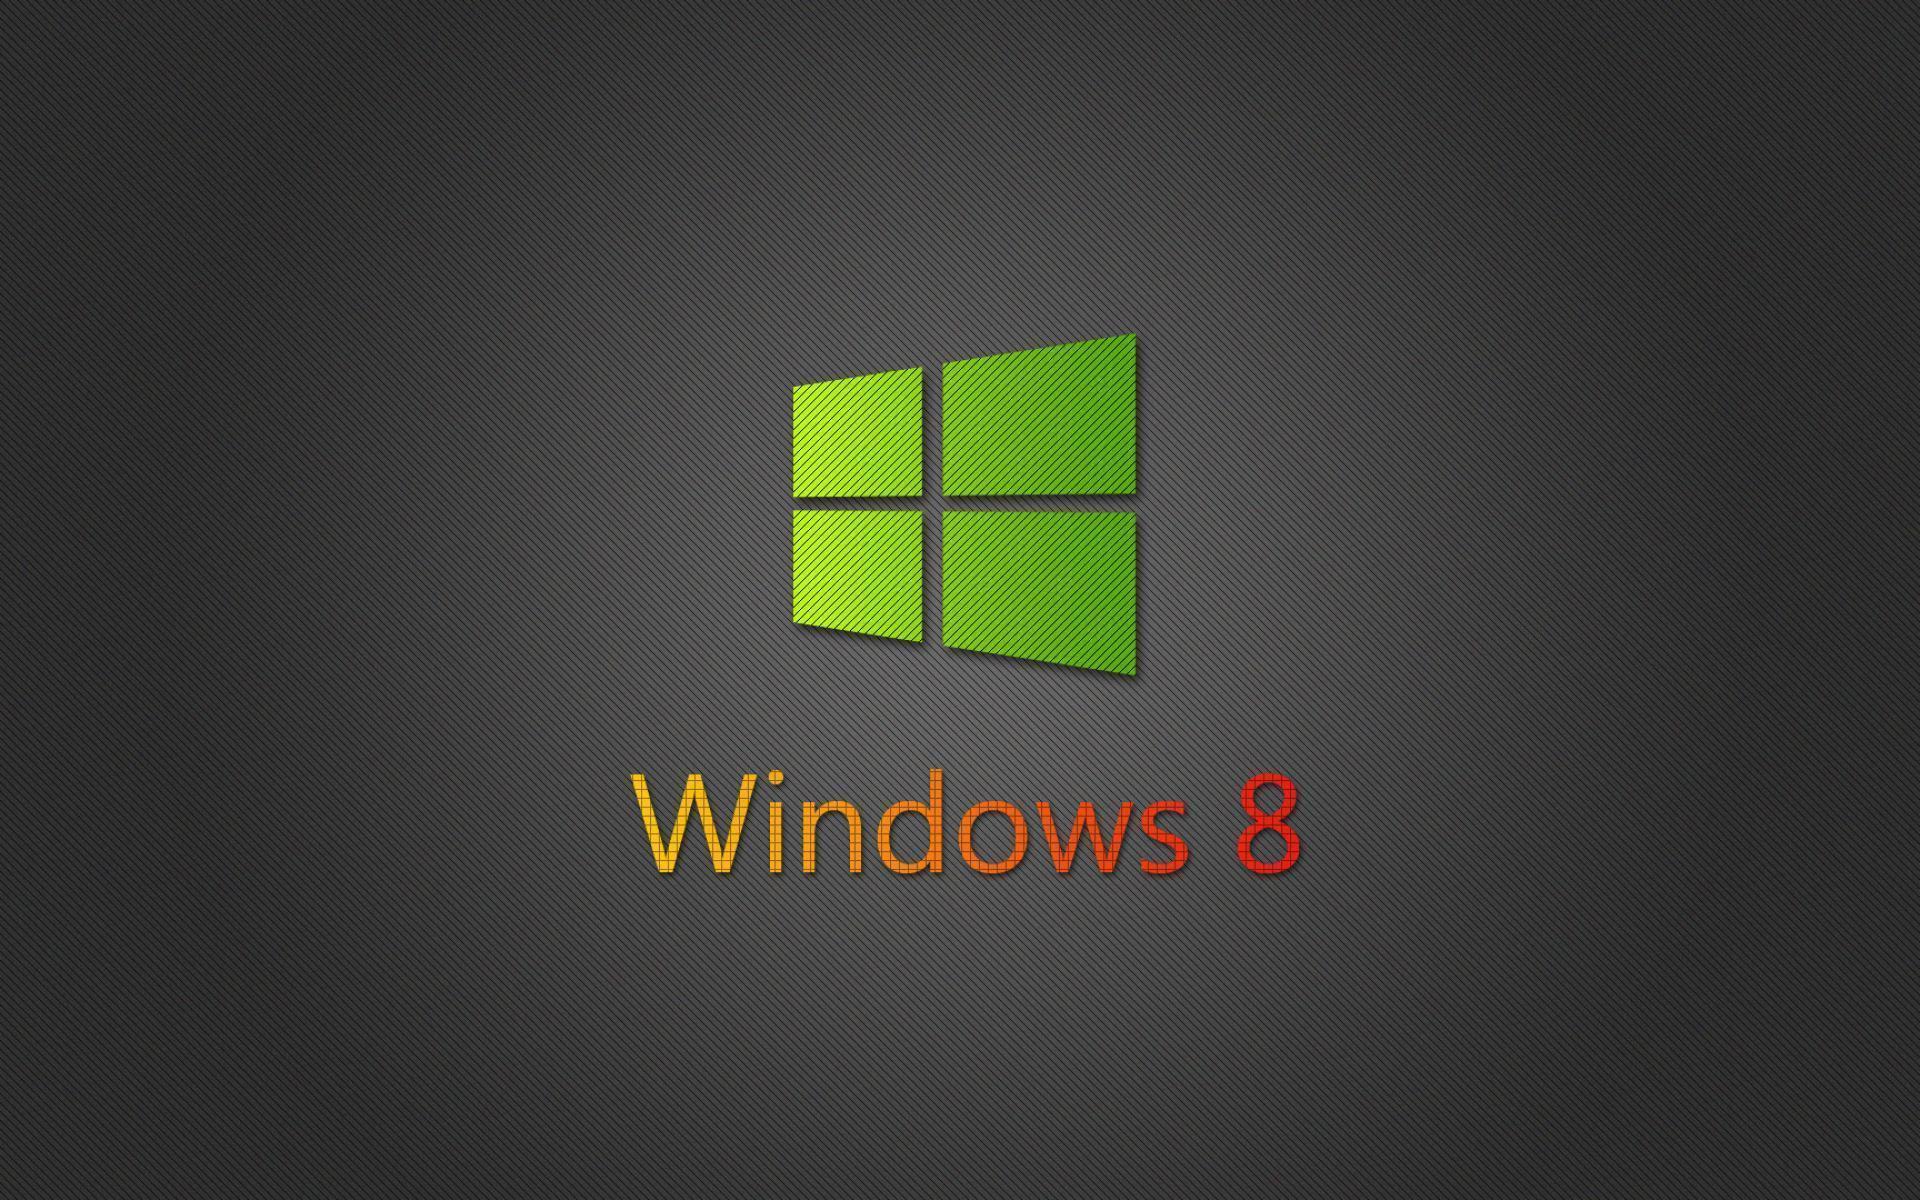 Hd Wallpaper Windows 8 Hq Widescreen 17 HD Wallpaper. Hdimges